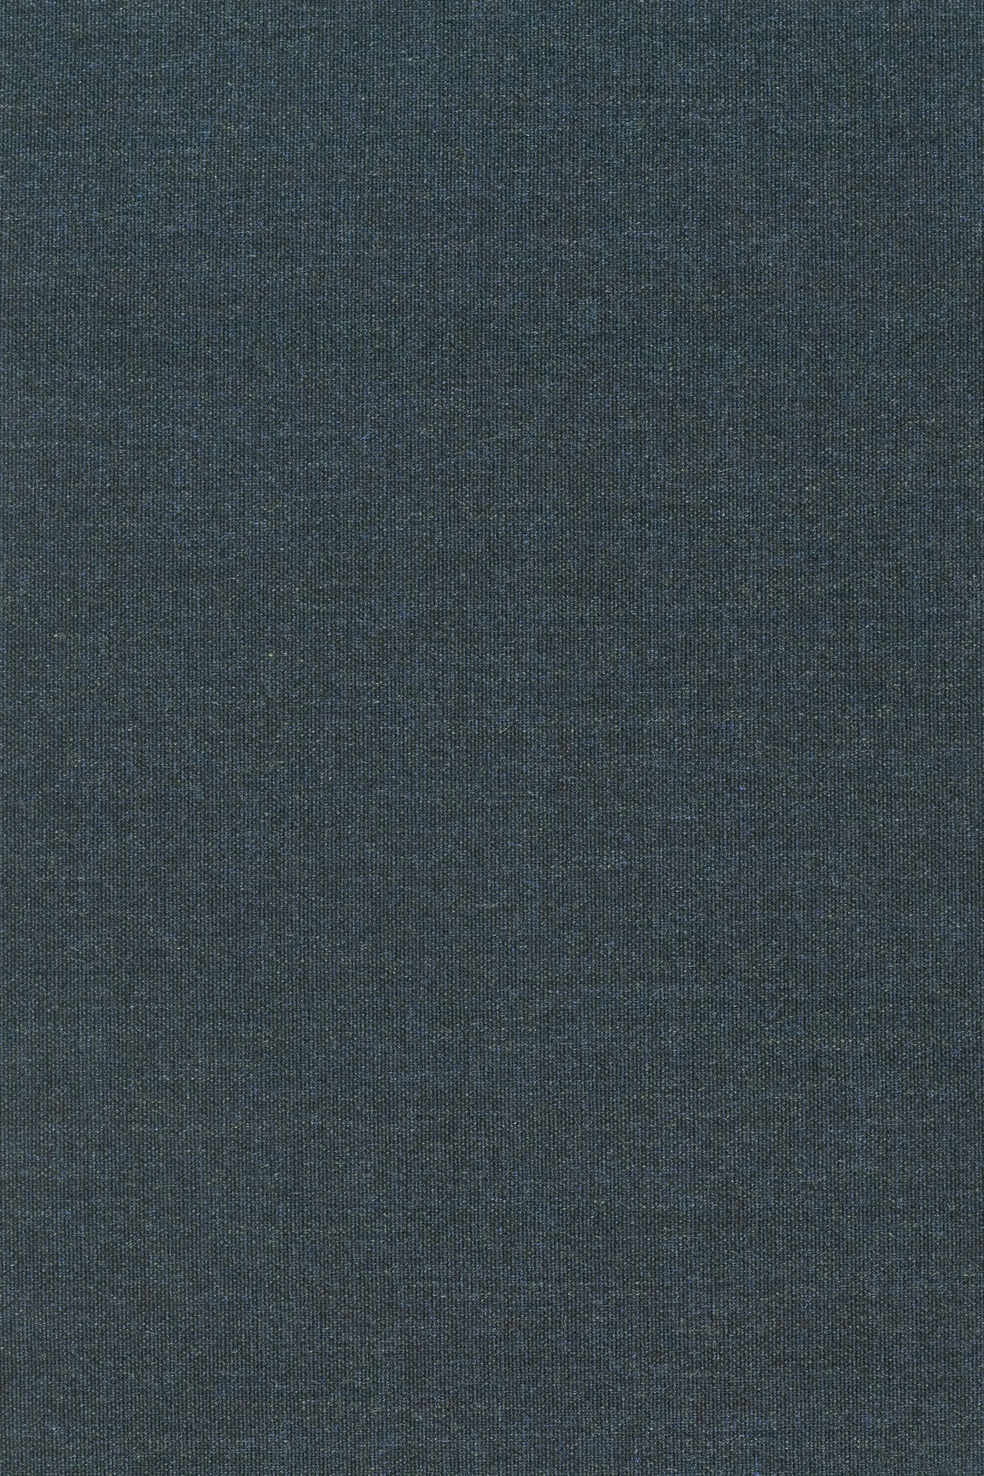 Fabric sample Remix 2 873 grey